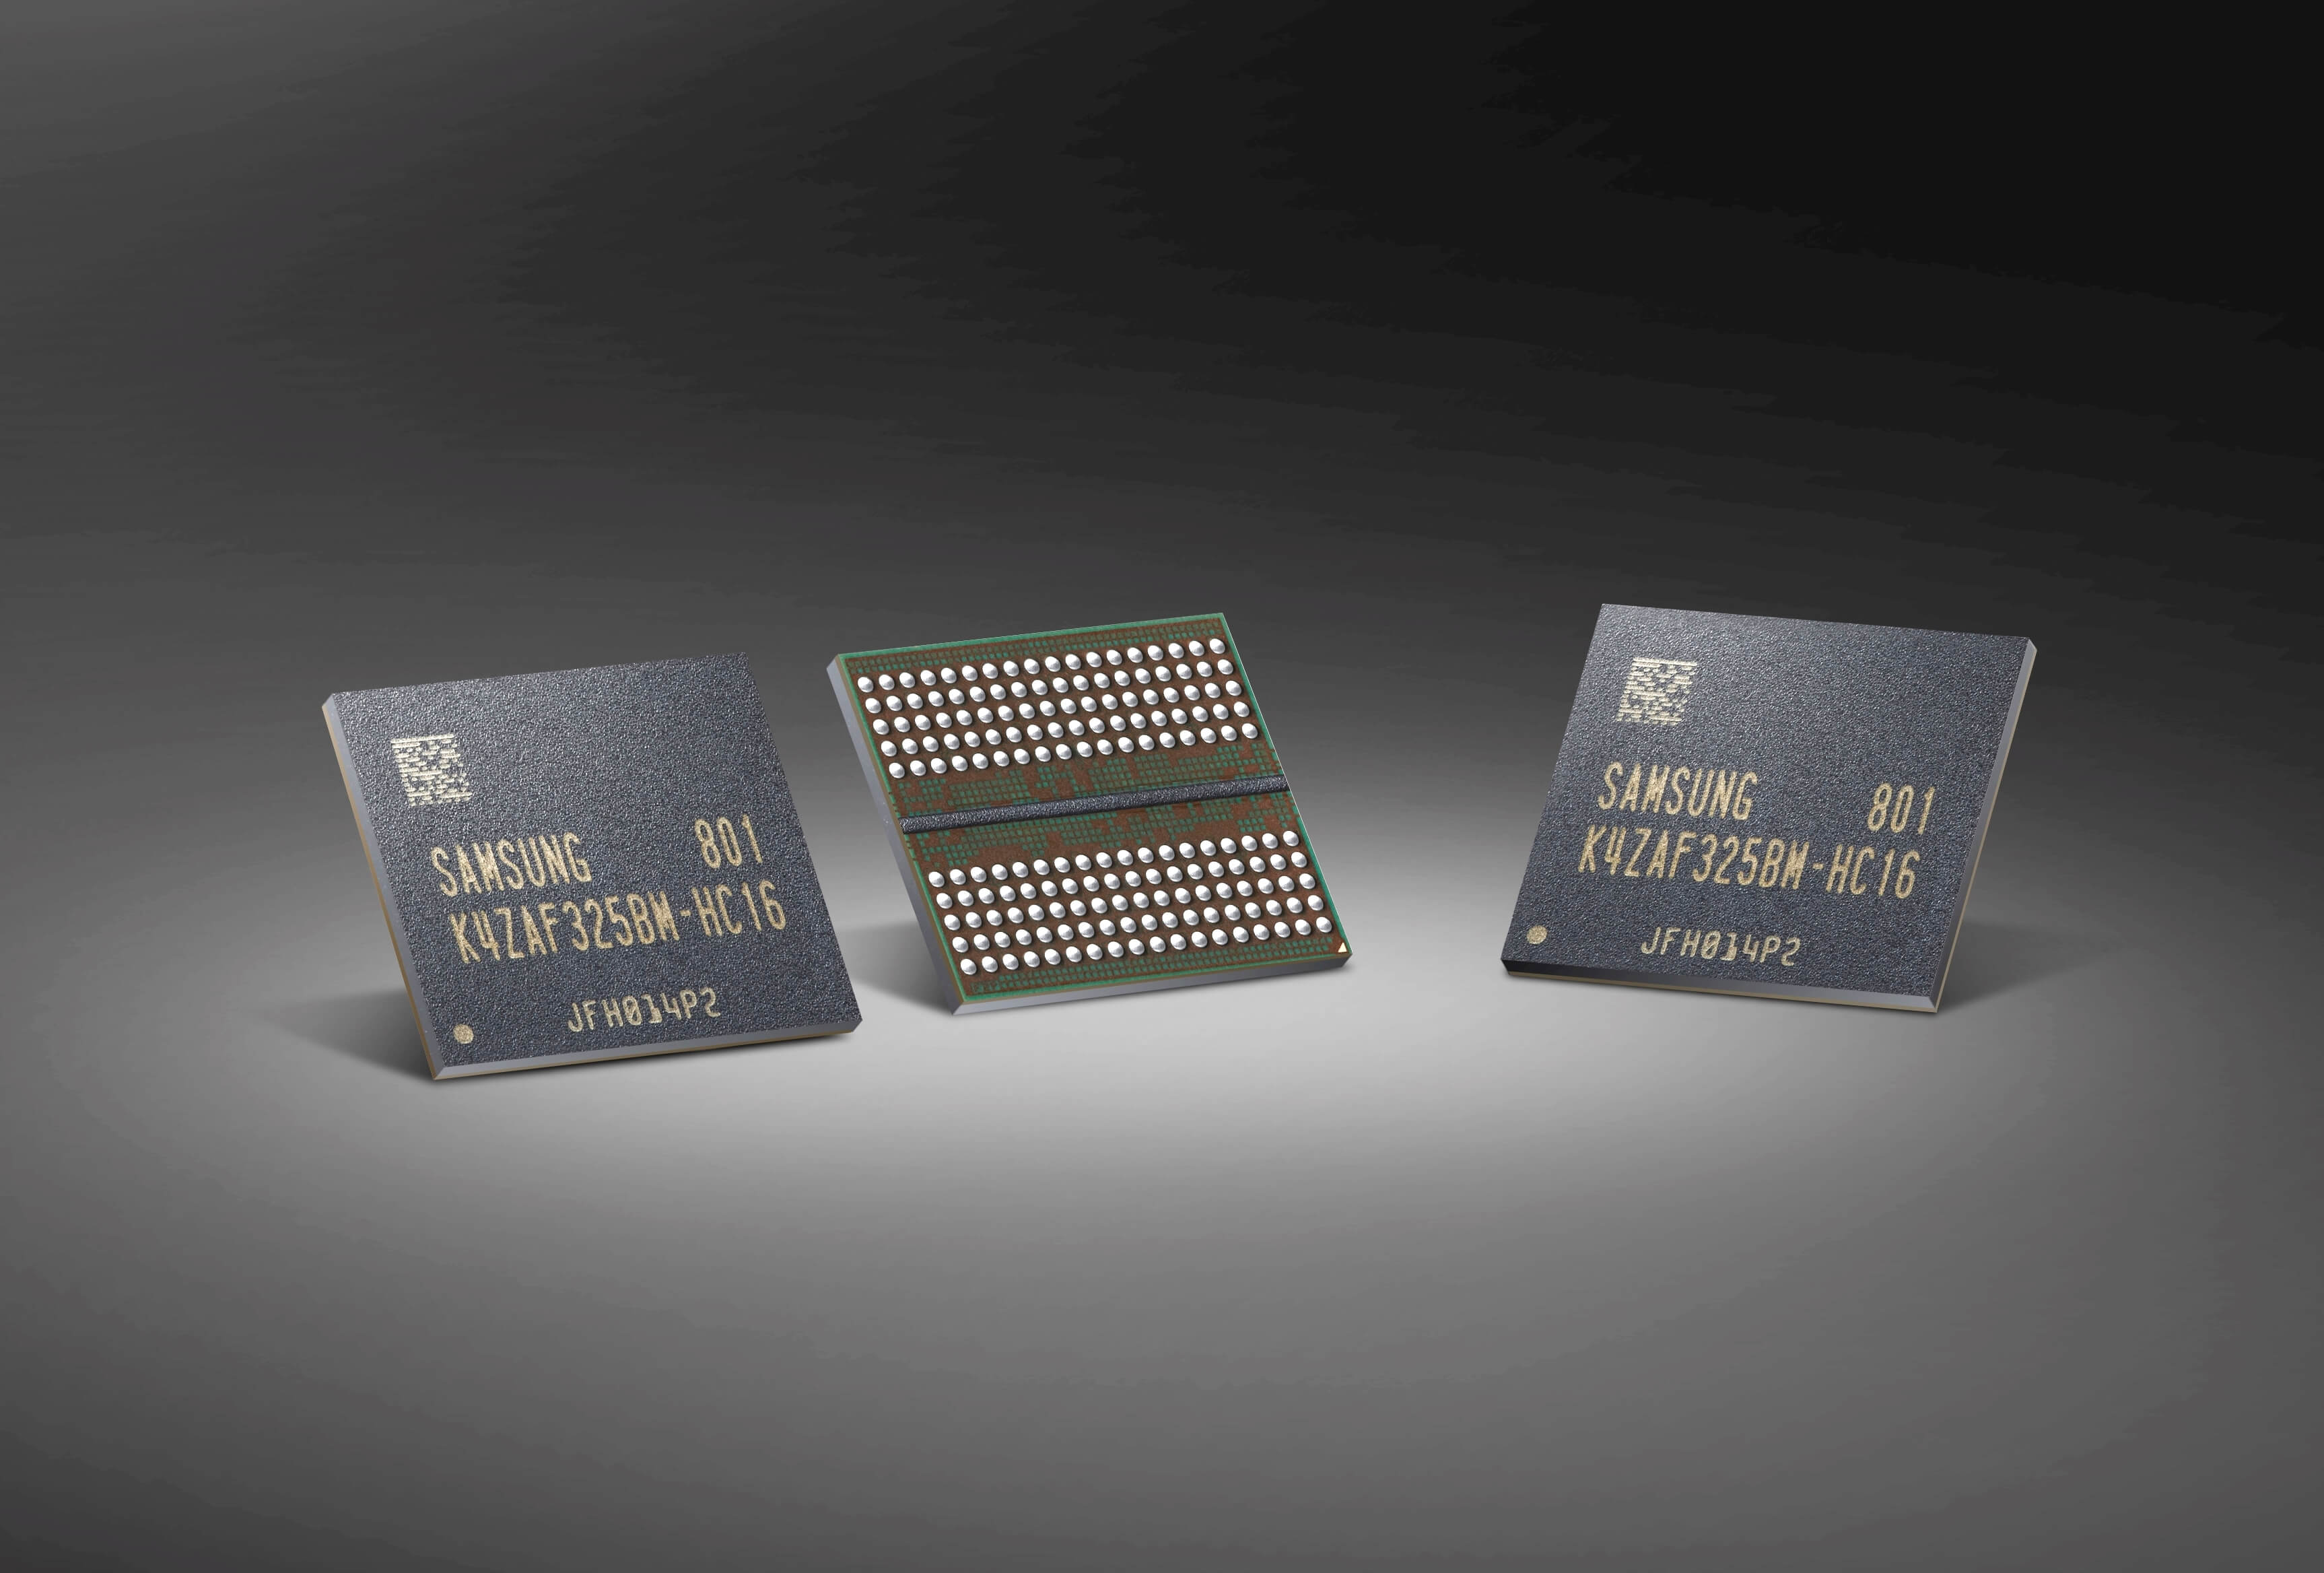 Samsung begins mass production of GDDR6 memory